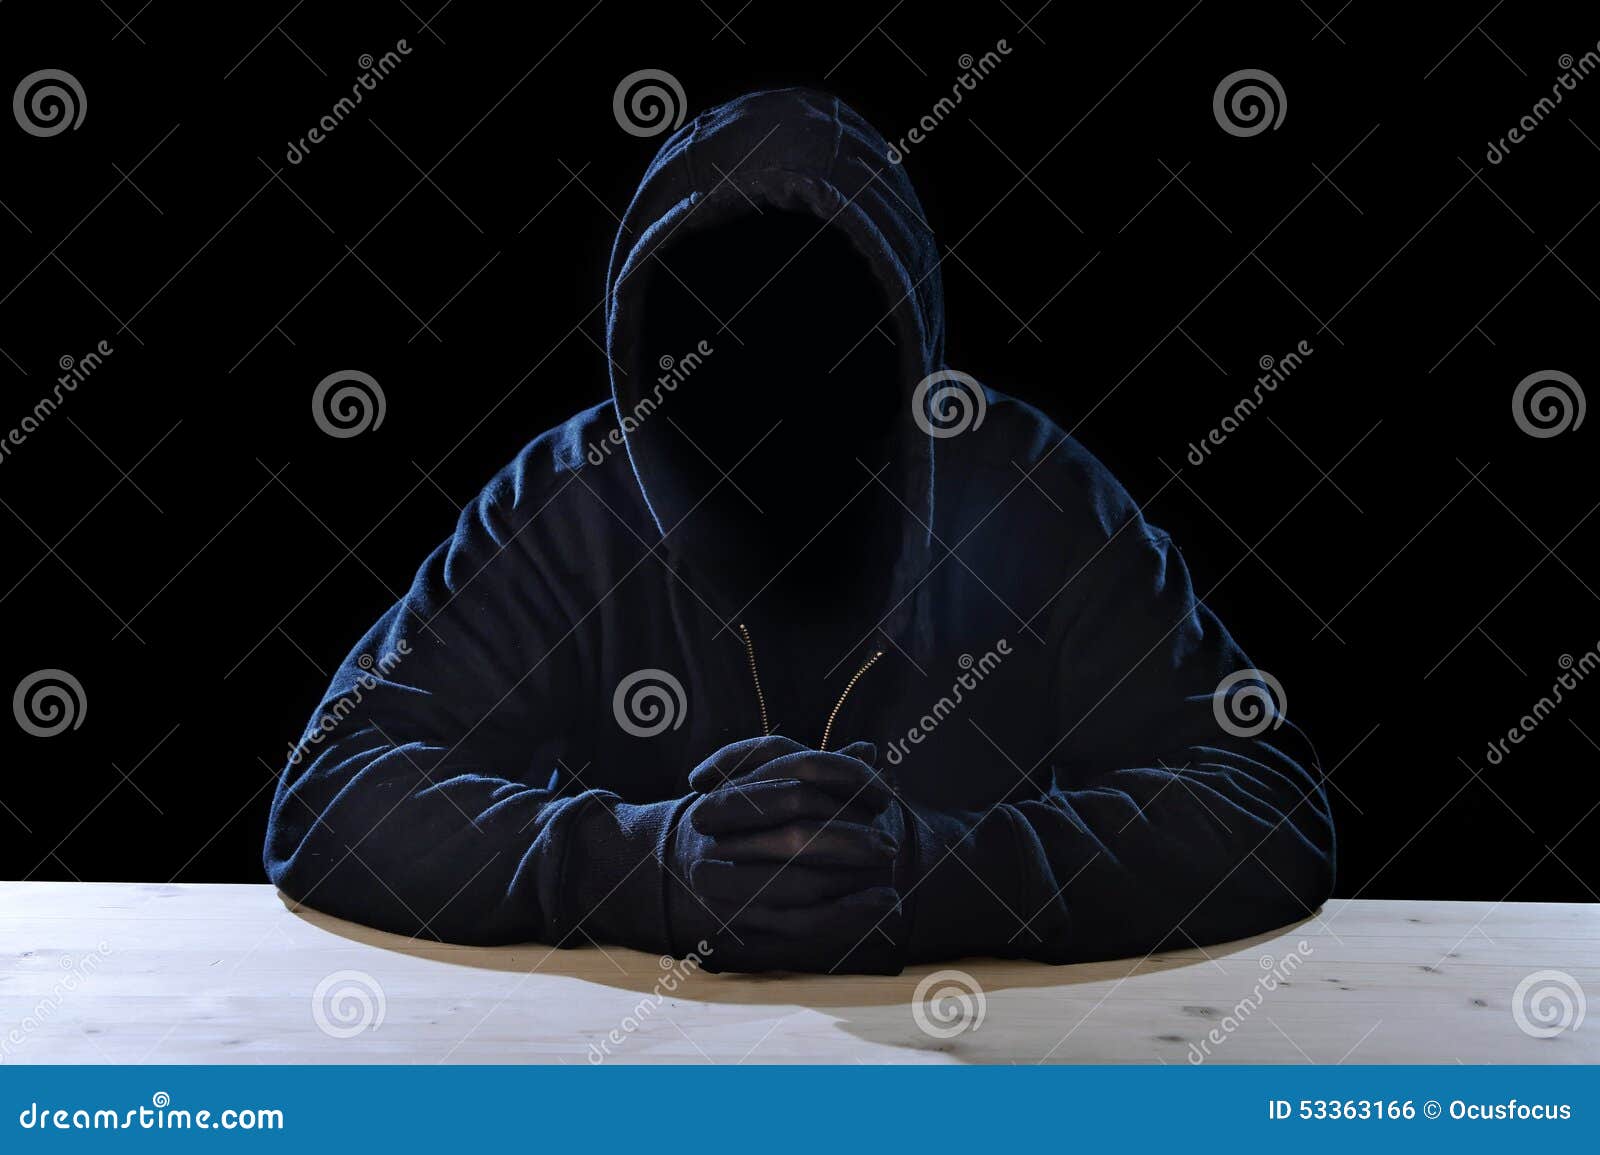 criminal or terrorist man in mask hidden identity in secret illegal activity crime concept